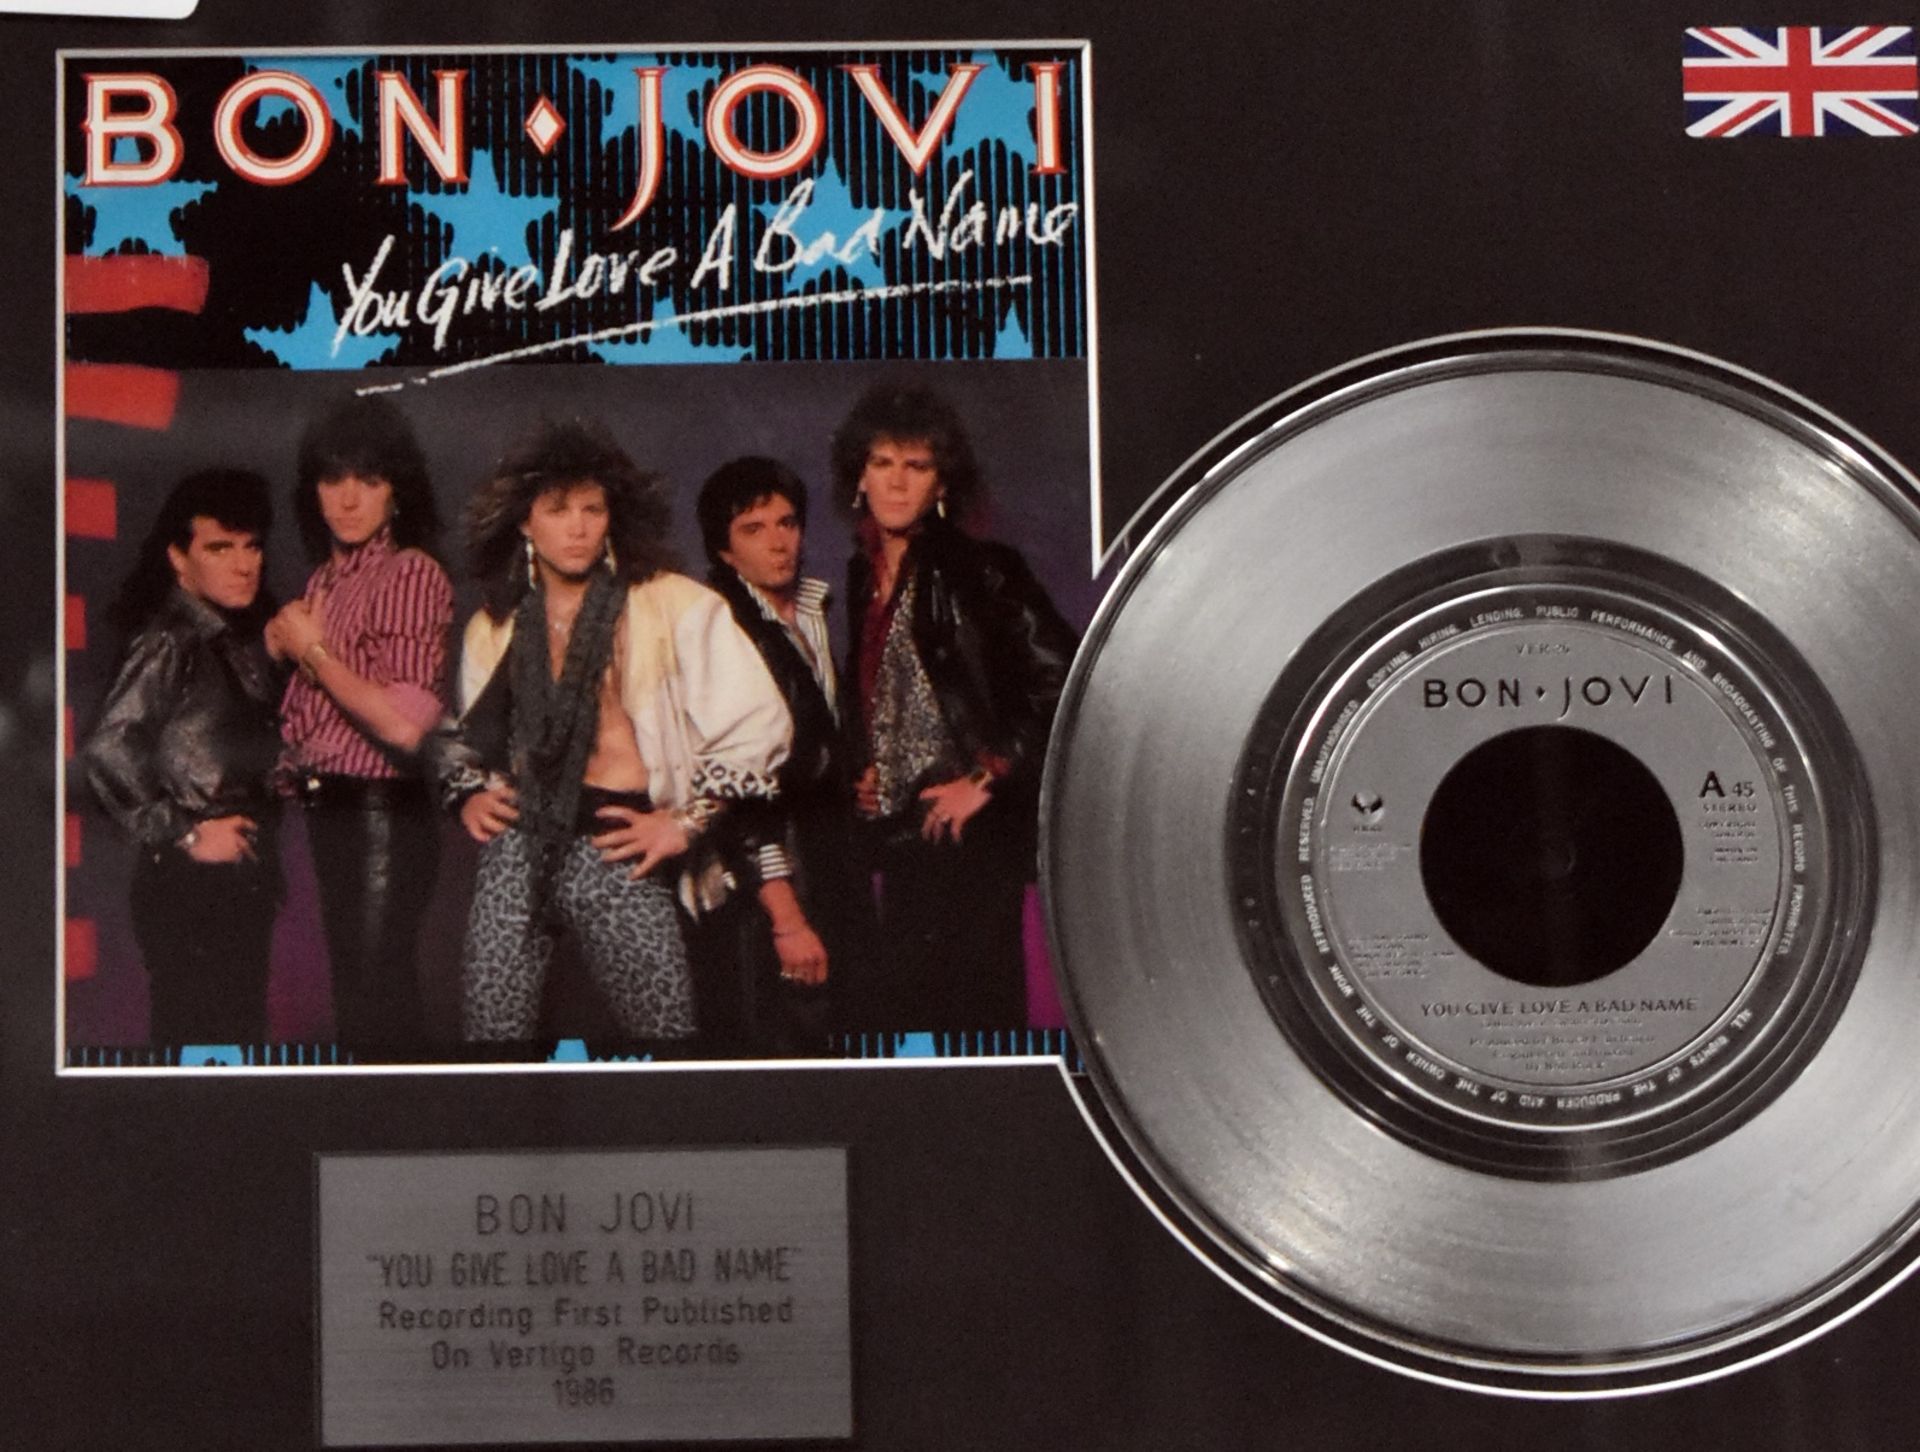 1 x BON JOVI - You Give Love A Bad Name On Vertigo Records Framed 7 Inch Vinyl - Image 4 of 5